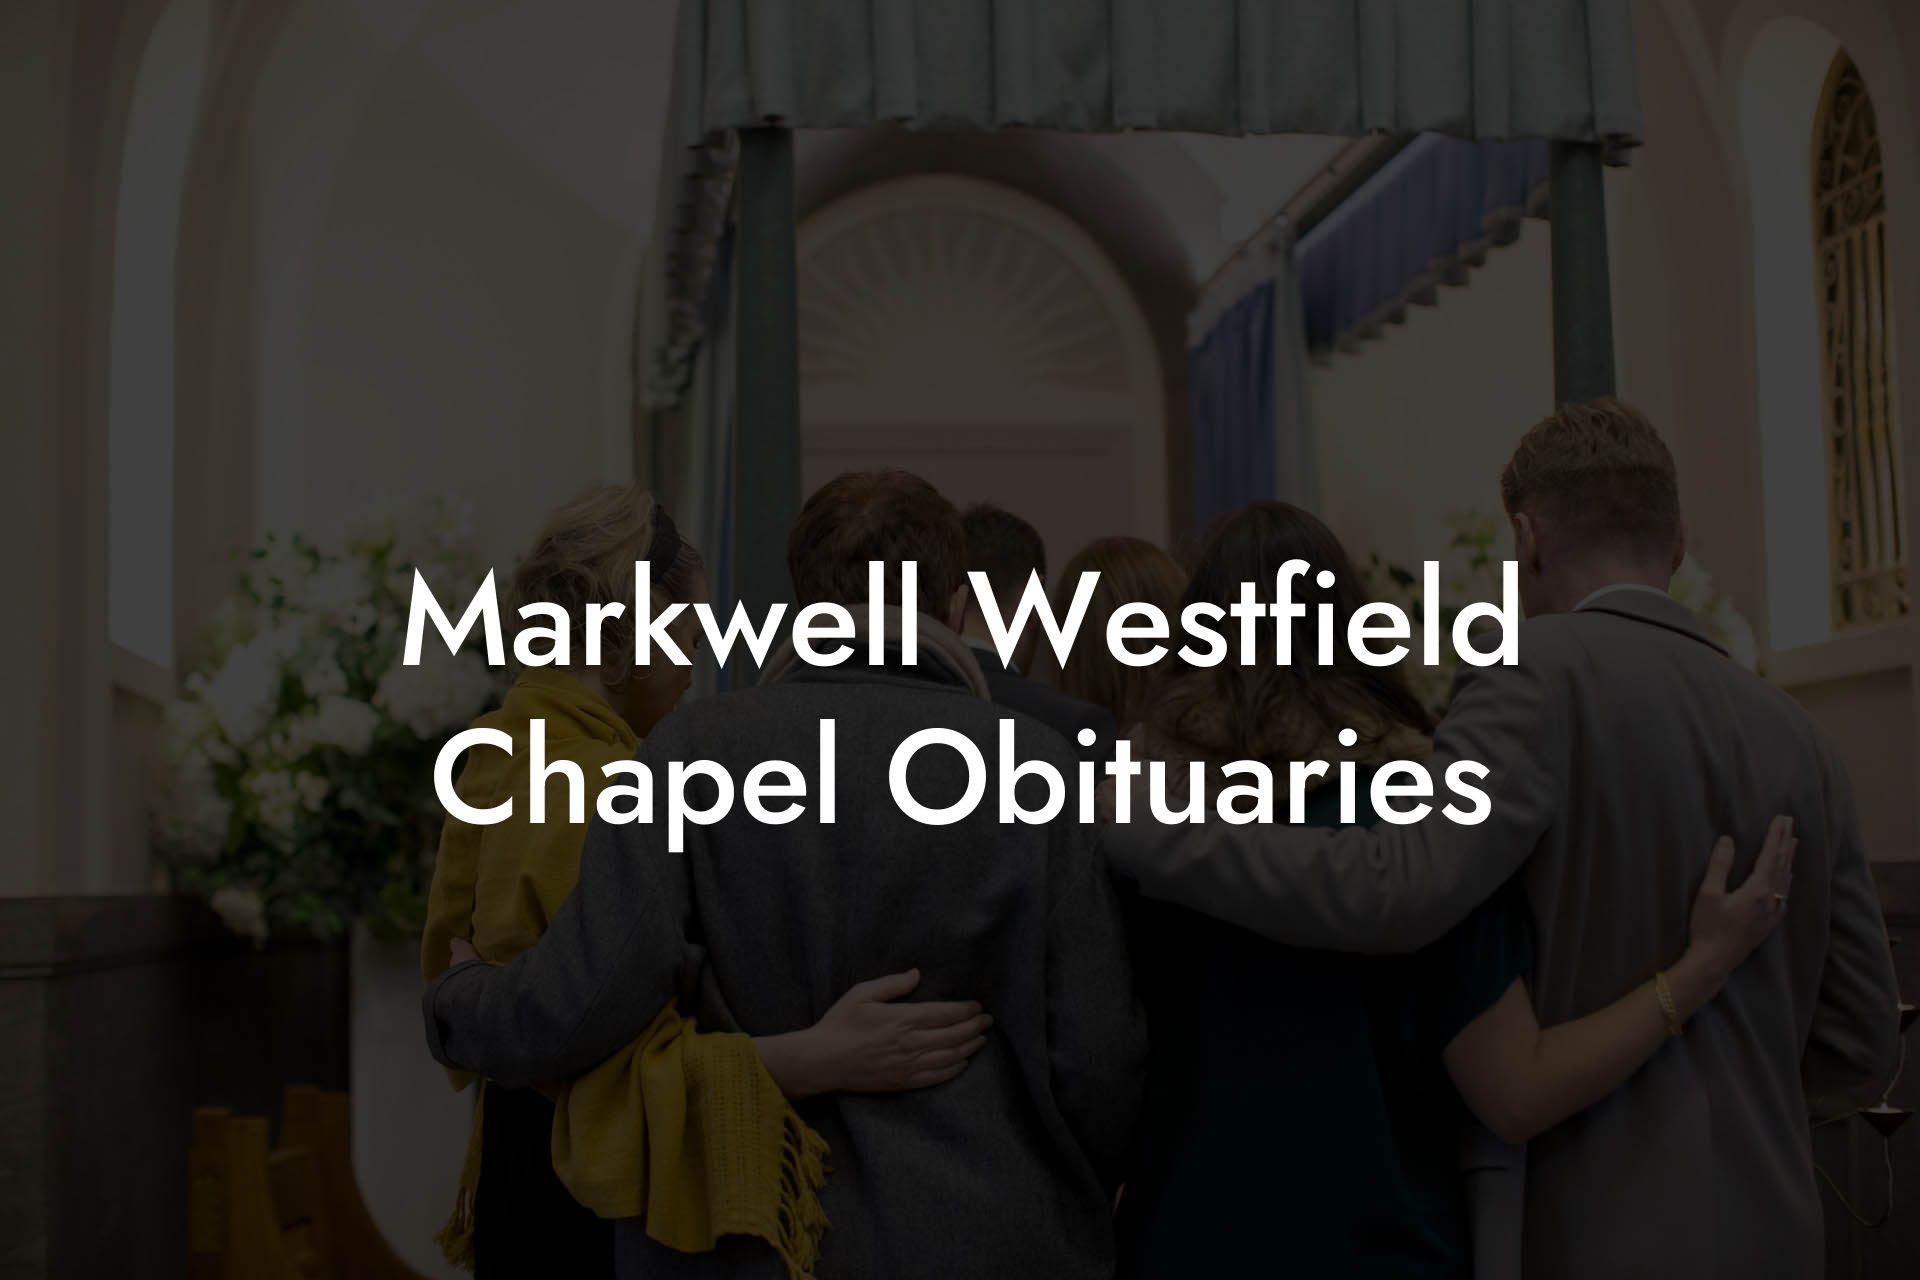 Markwell Westfield Chapel Obituaries